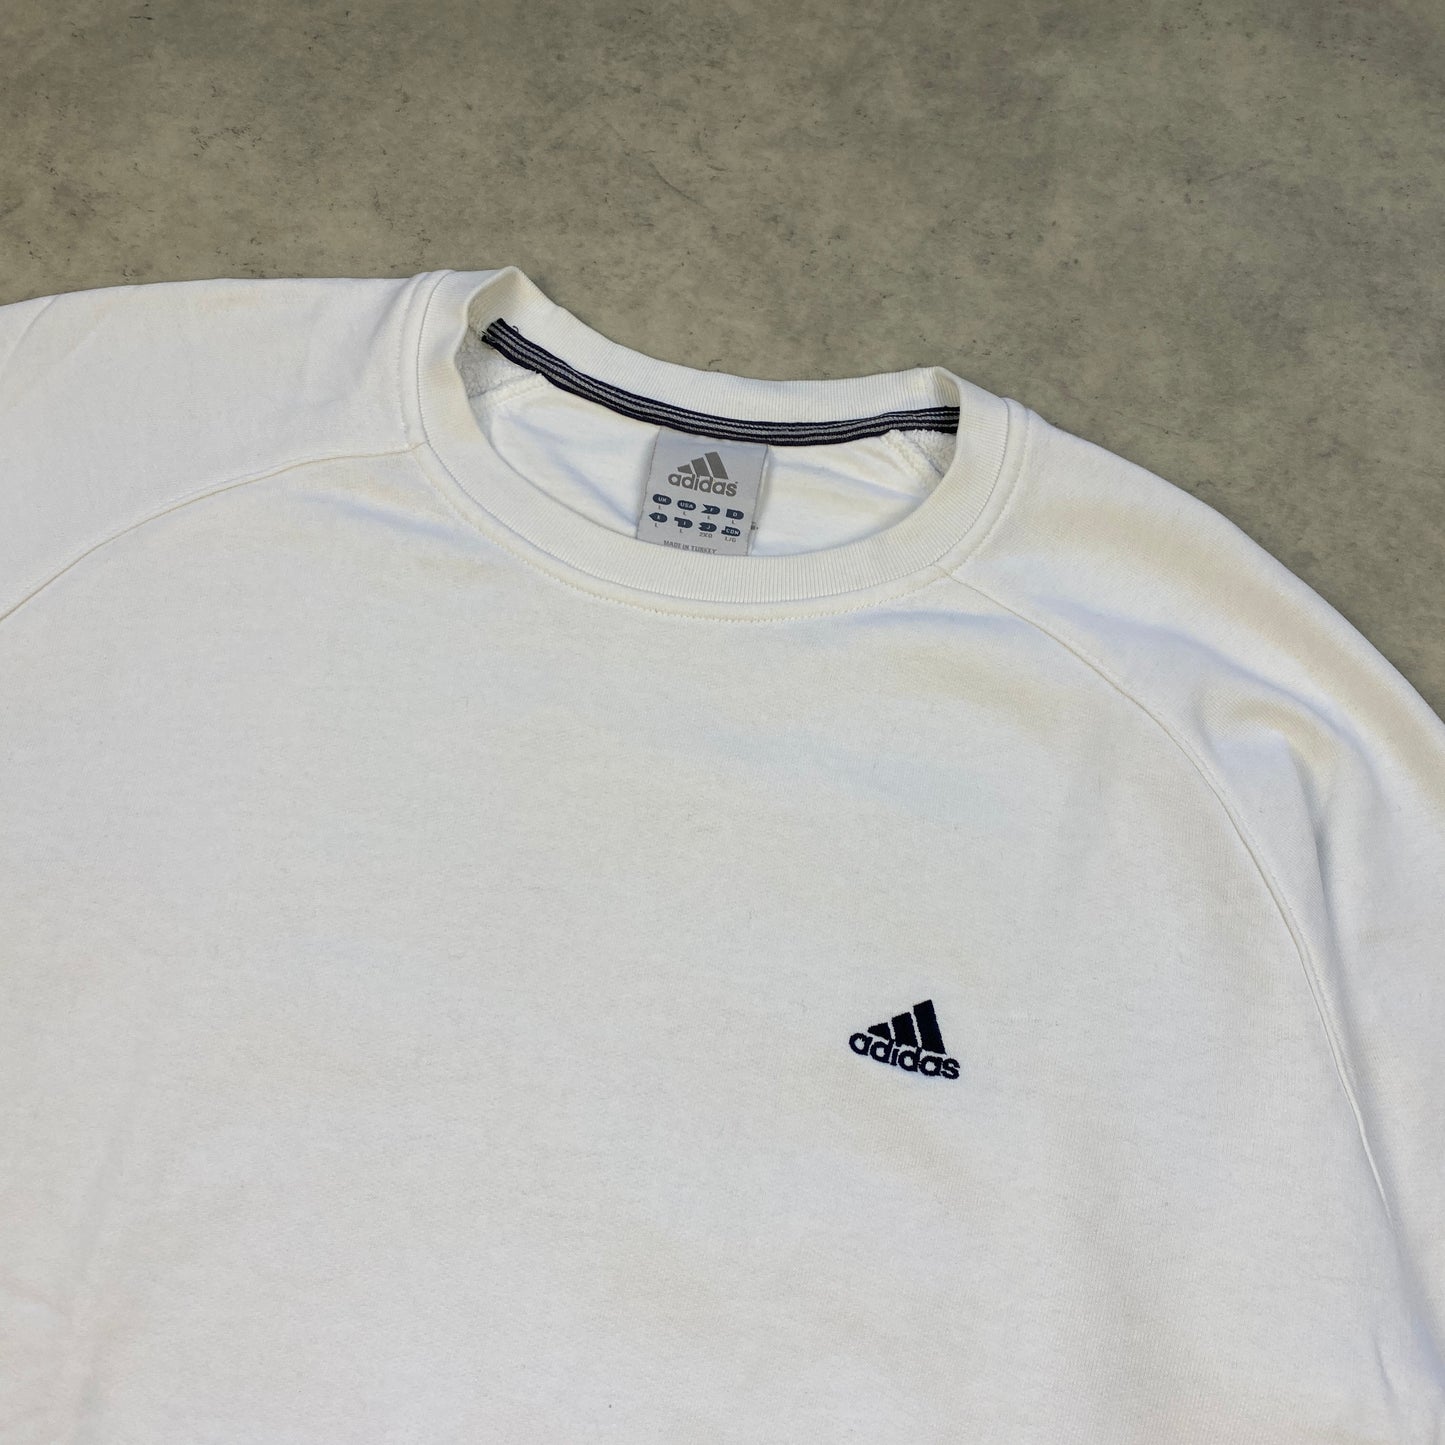 Adidas sweater (L)